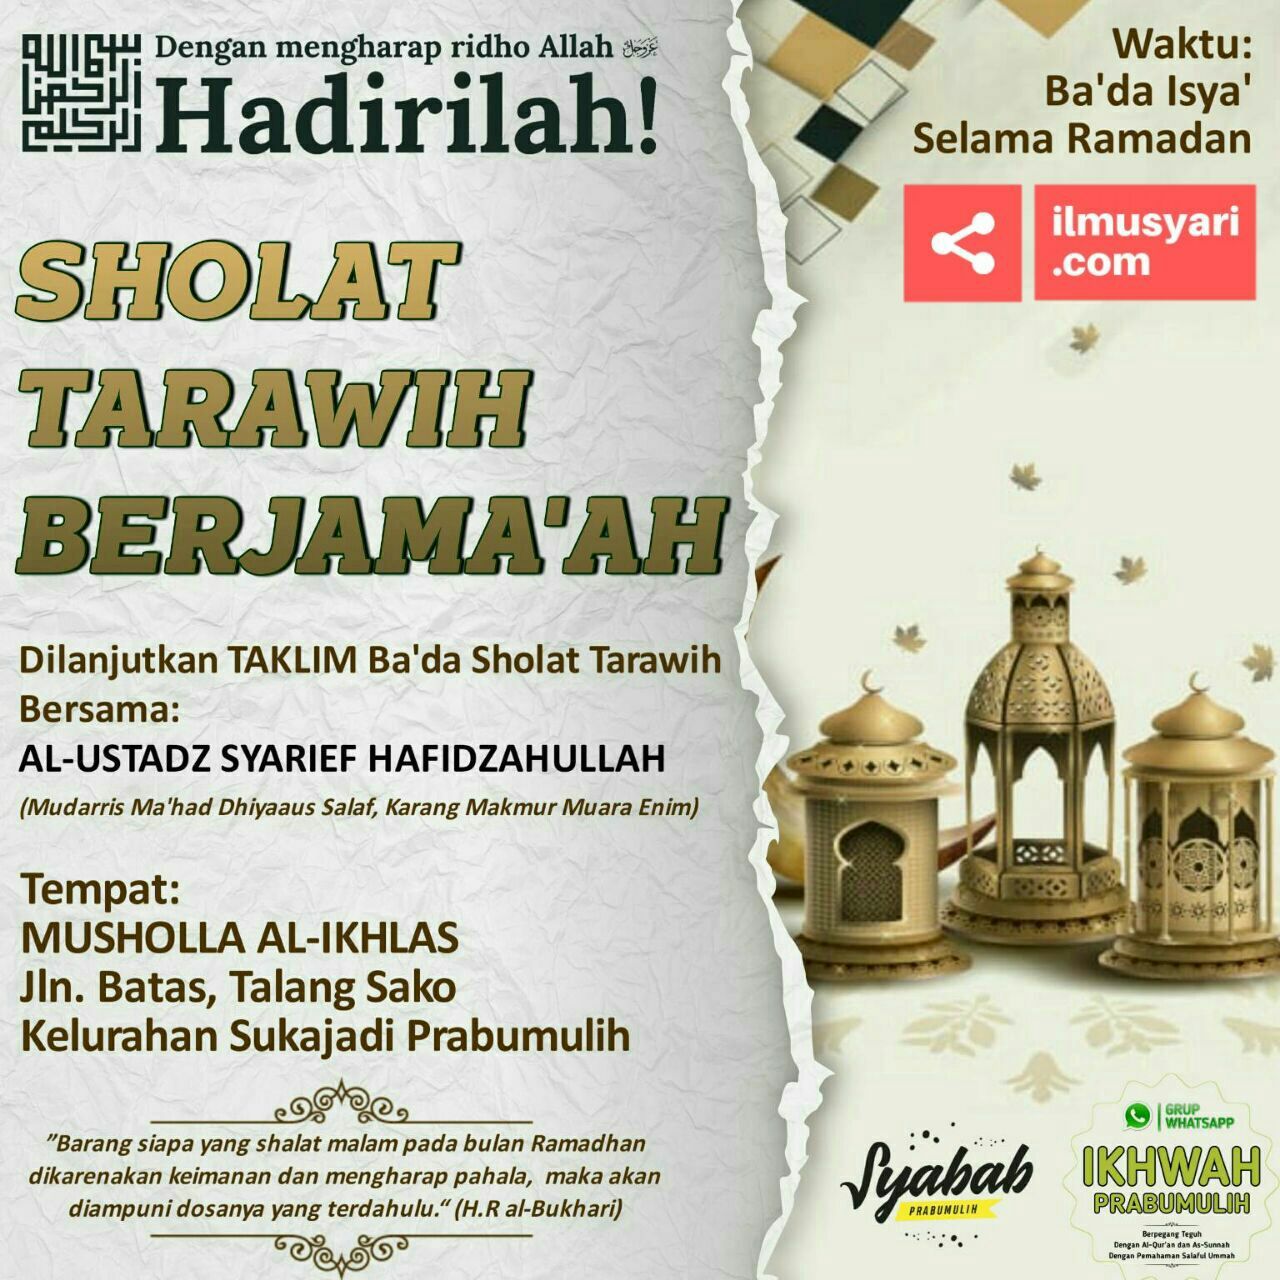 Prabumulih, (Shalat Tarawih dan Taklim Ramadhan), Mei 2019'